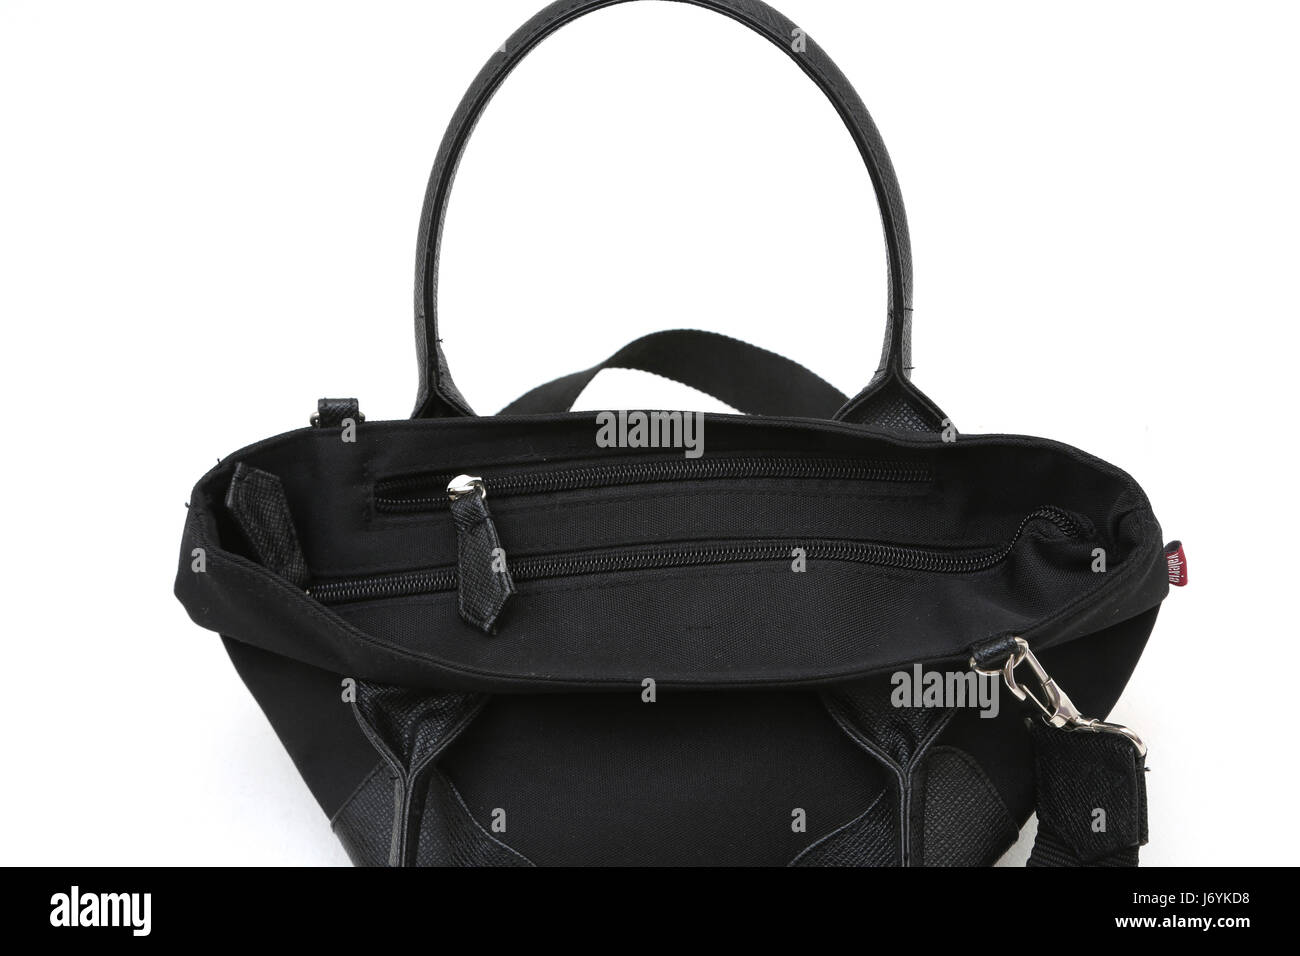 Valeria Black Handbag Stock Photo